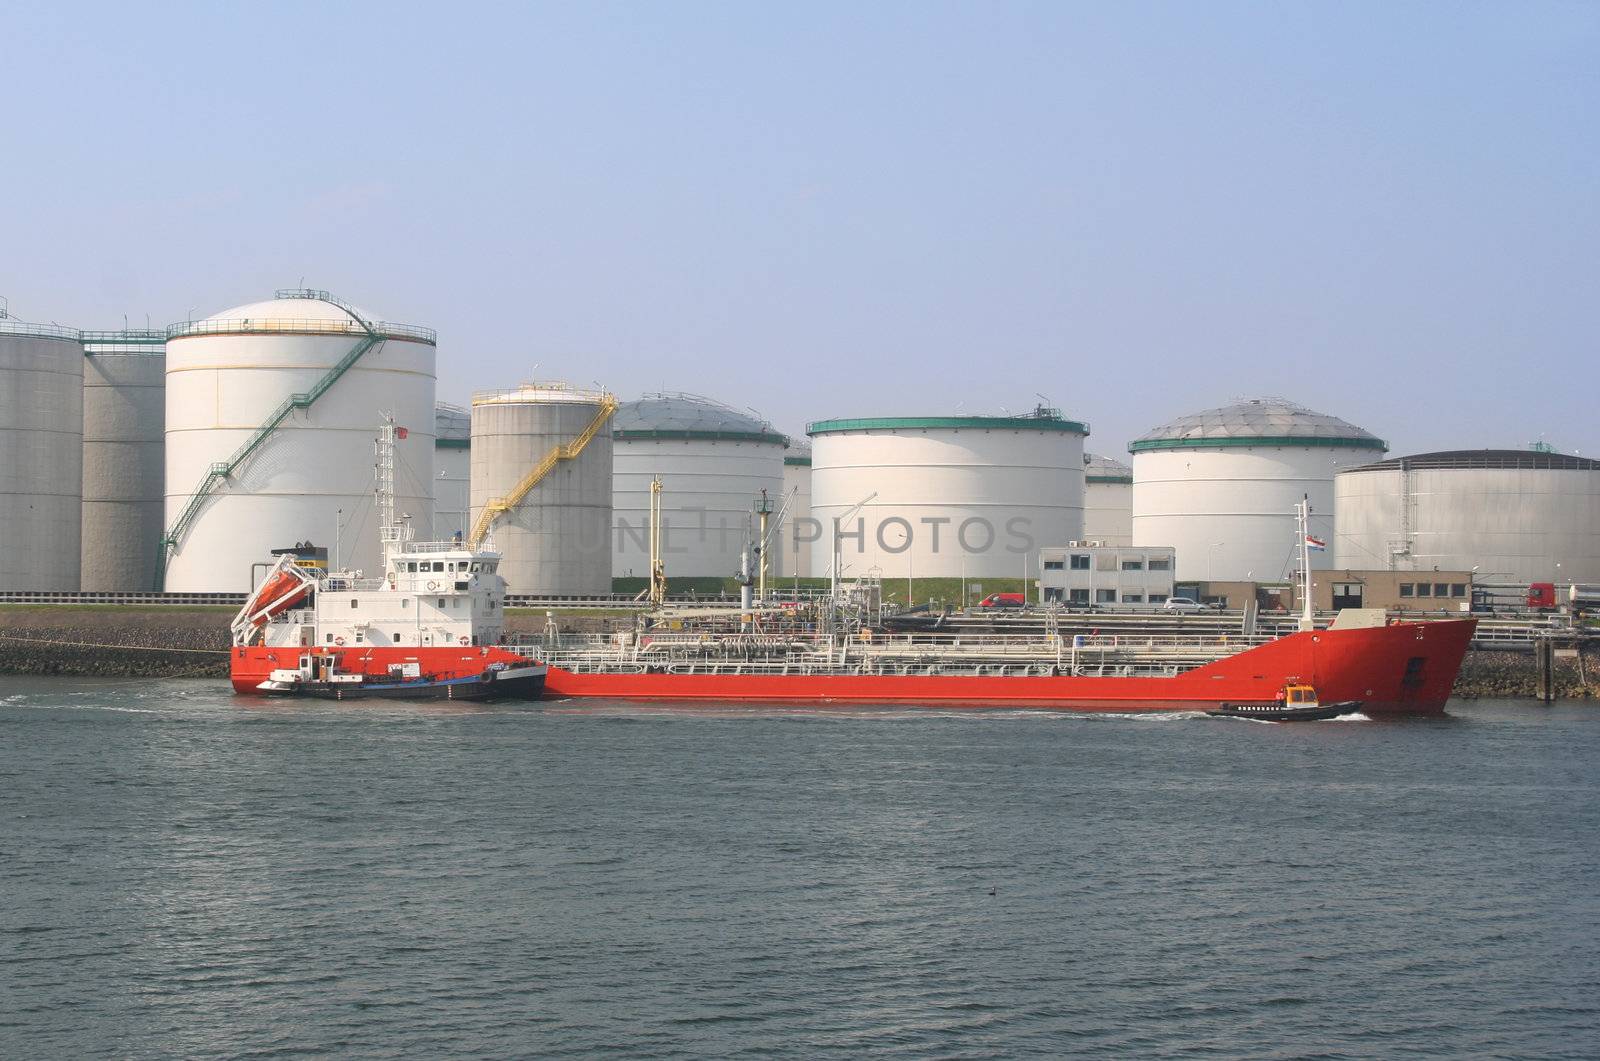 Red oil tanker among oil storage tanks in Rotterdam harbor